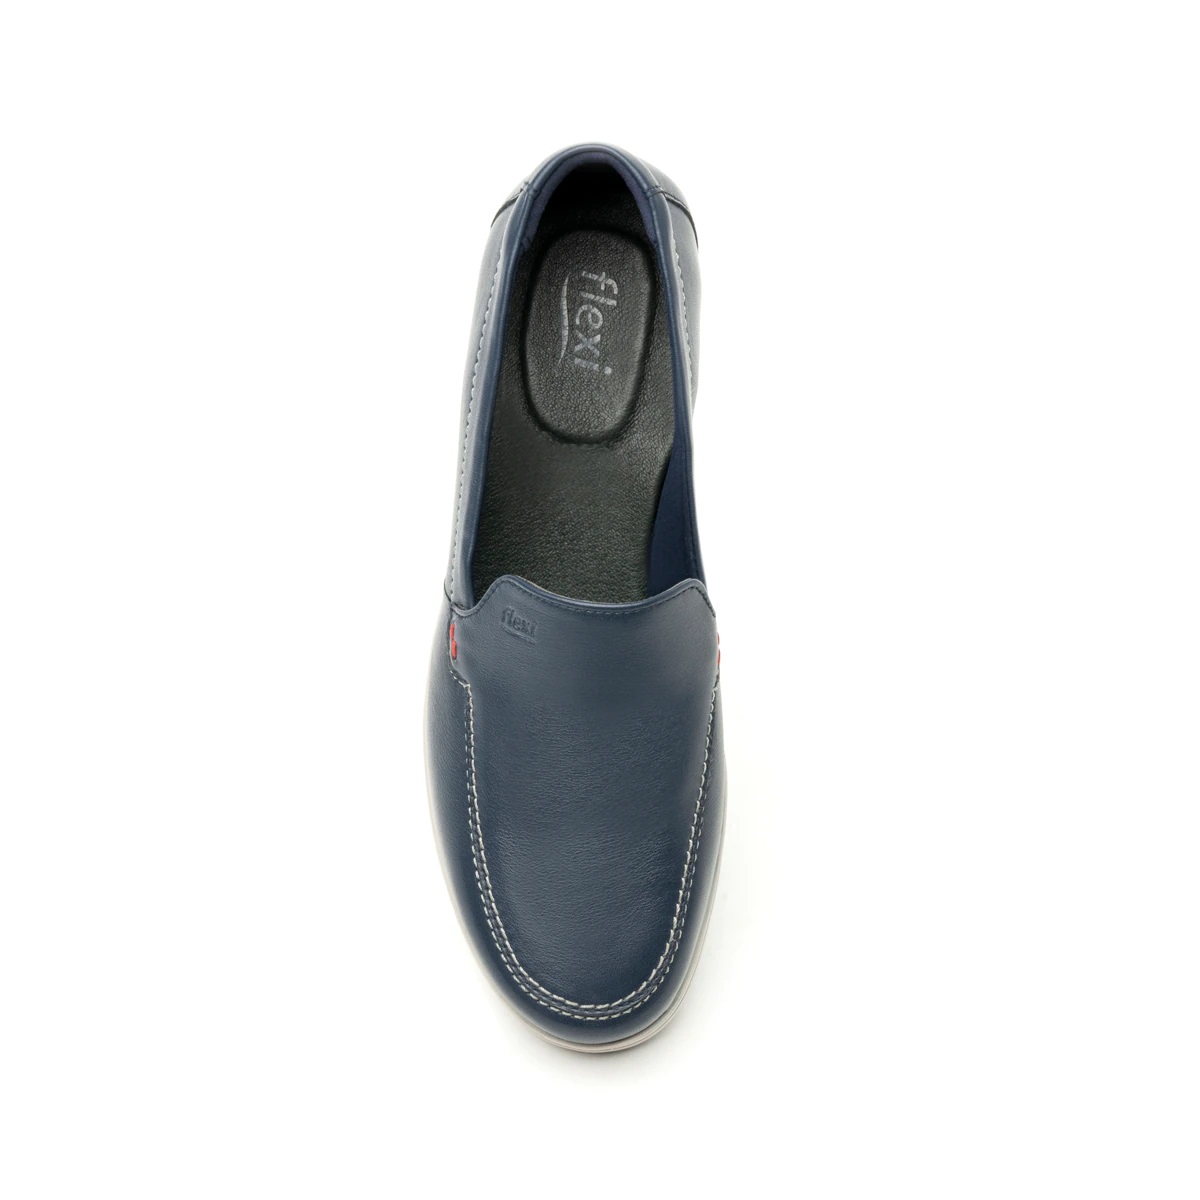 Zapato Dama Flexi 104806 Loafer Plataforma Extra Ligero Azul